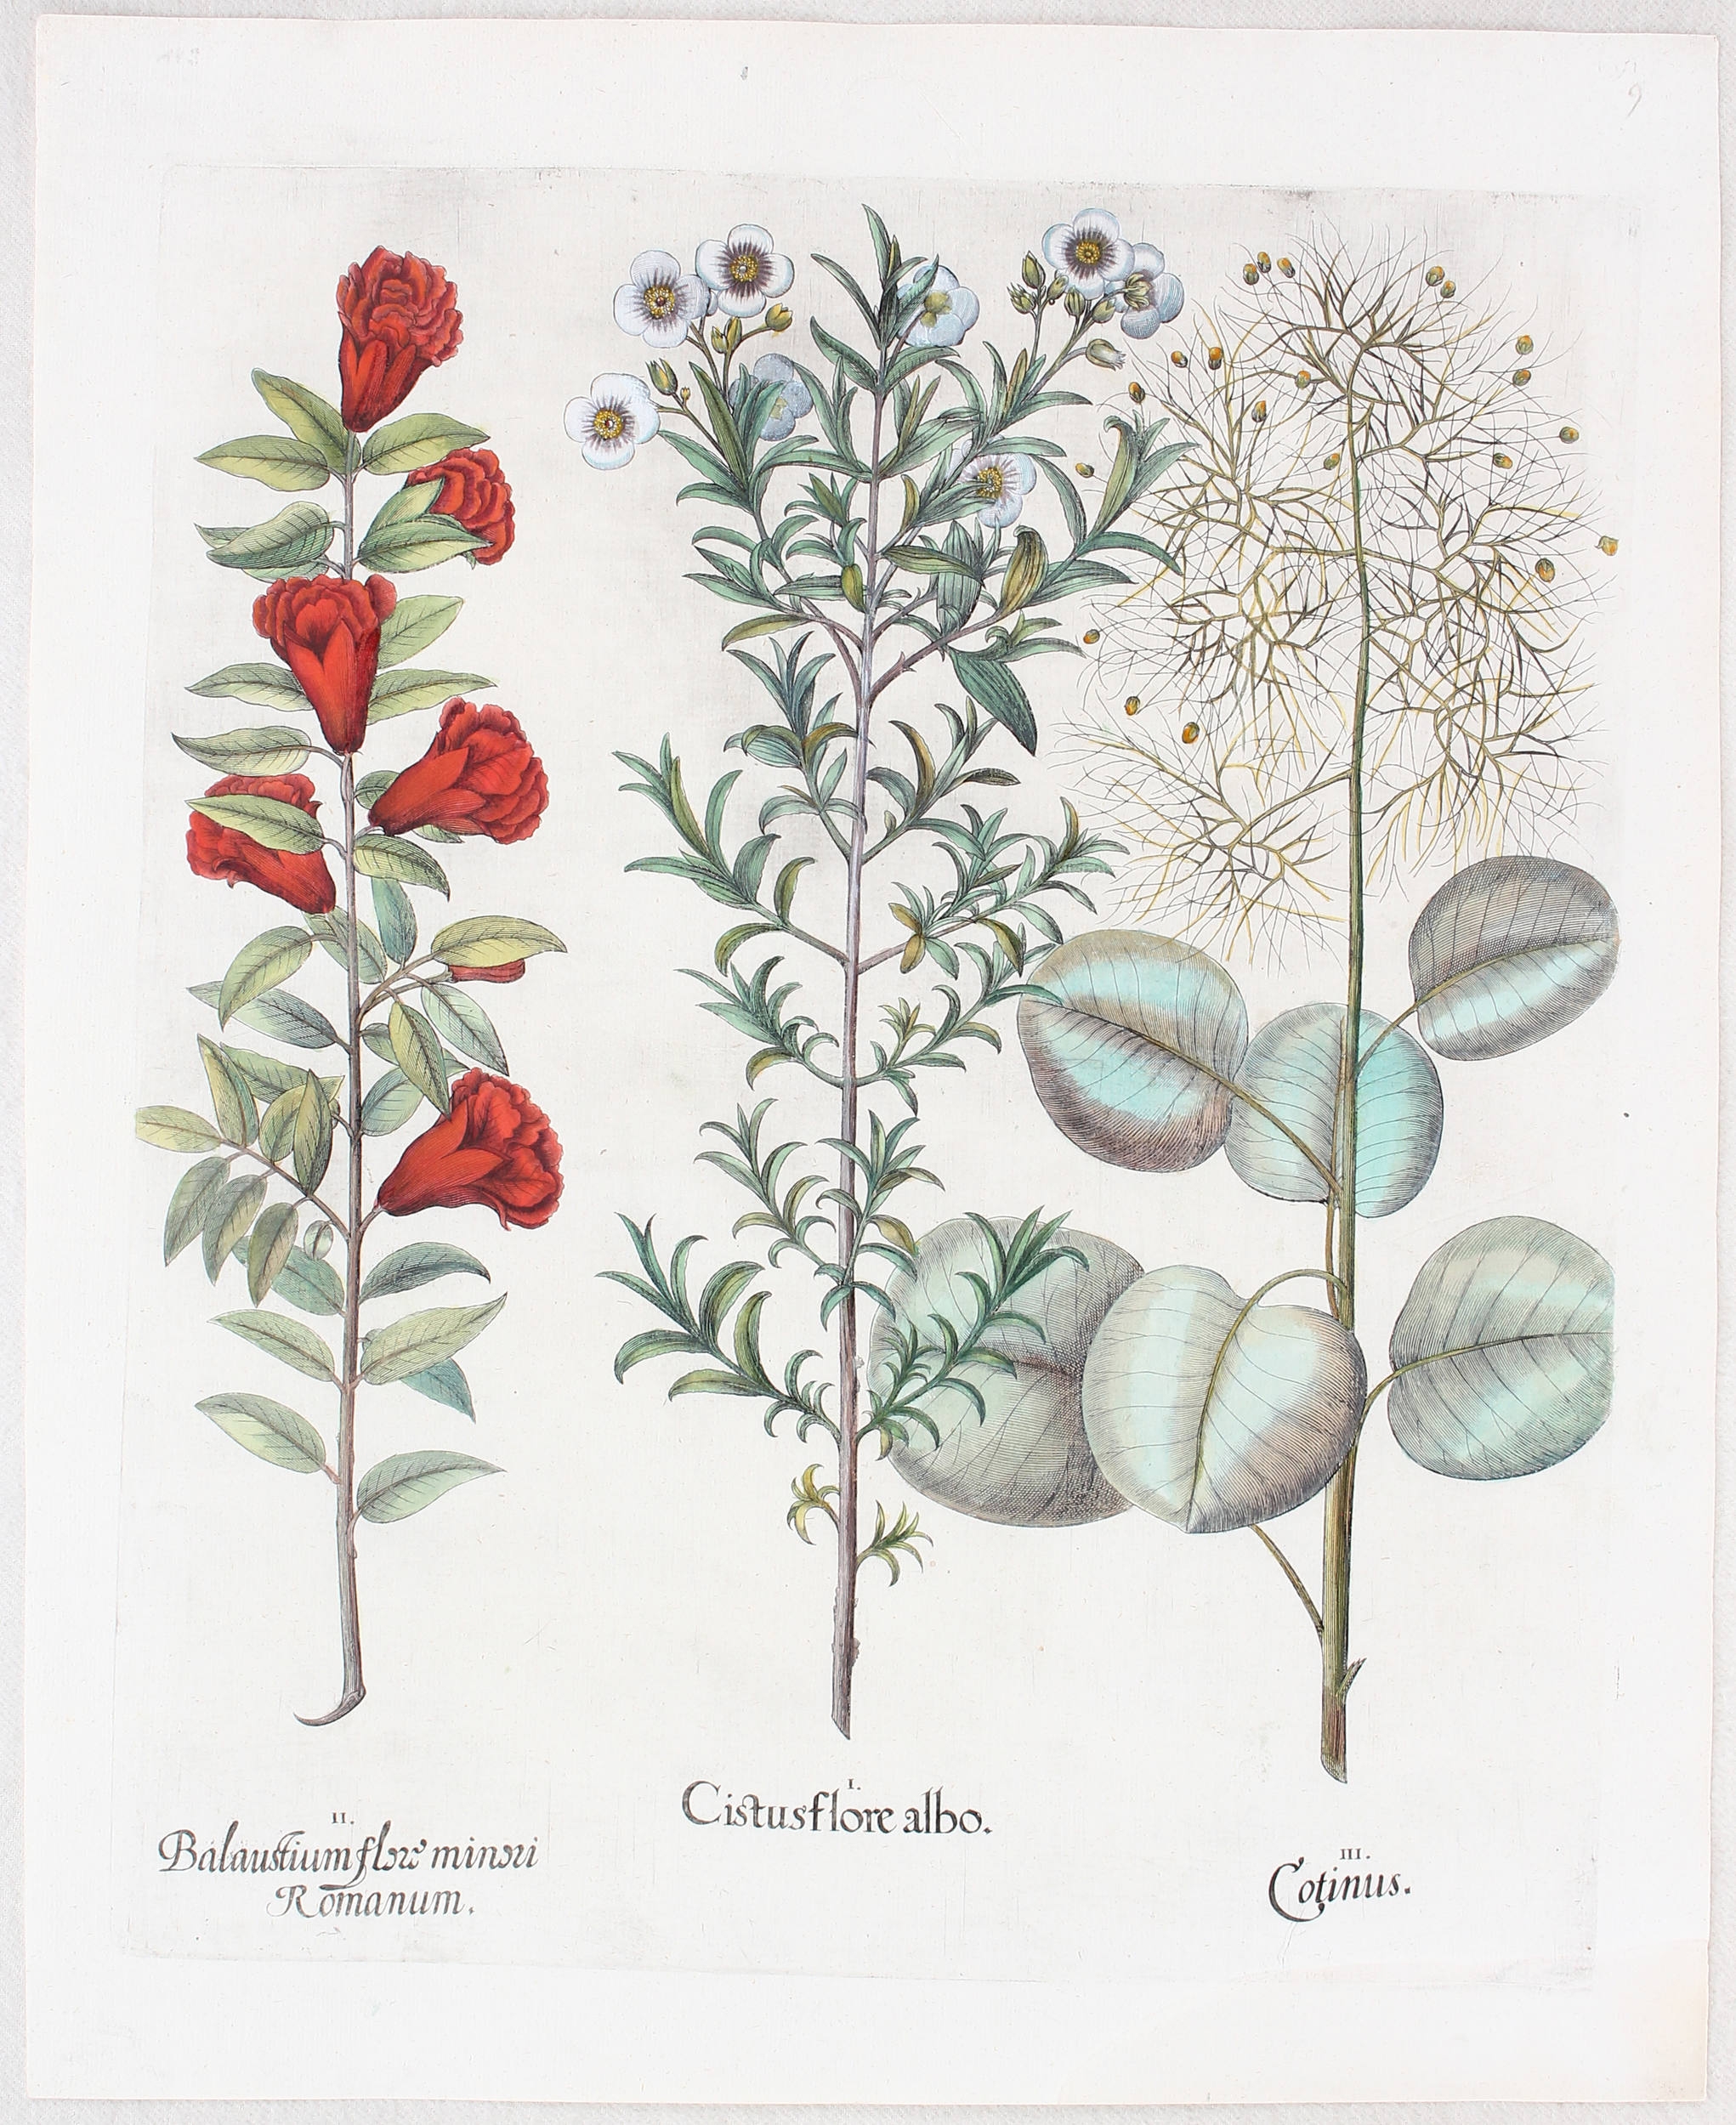 Cistusflore albo (&) Balaustium flore minori romanum (&) Cotinus (Cistrose aus Montpellier, Blühender Granatapfelbaum, Perückenstrauch)